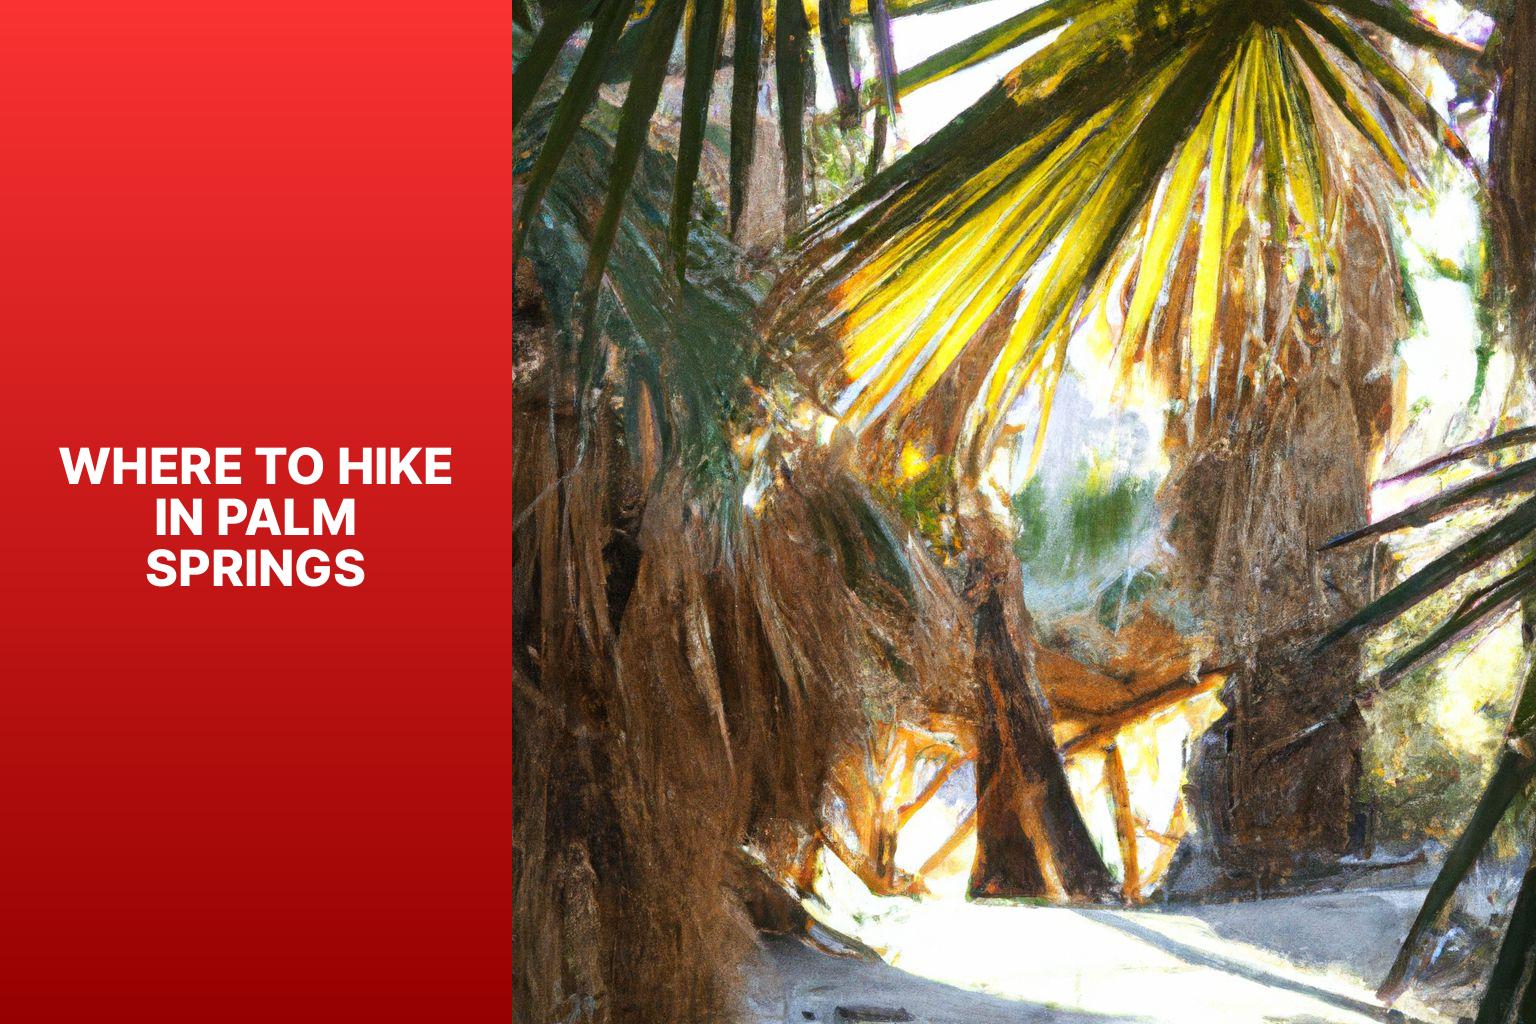 where to hike in palm springsbnn9